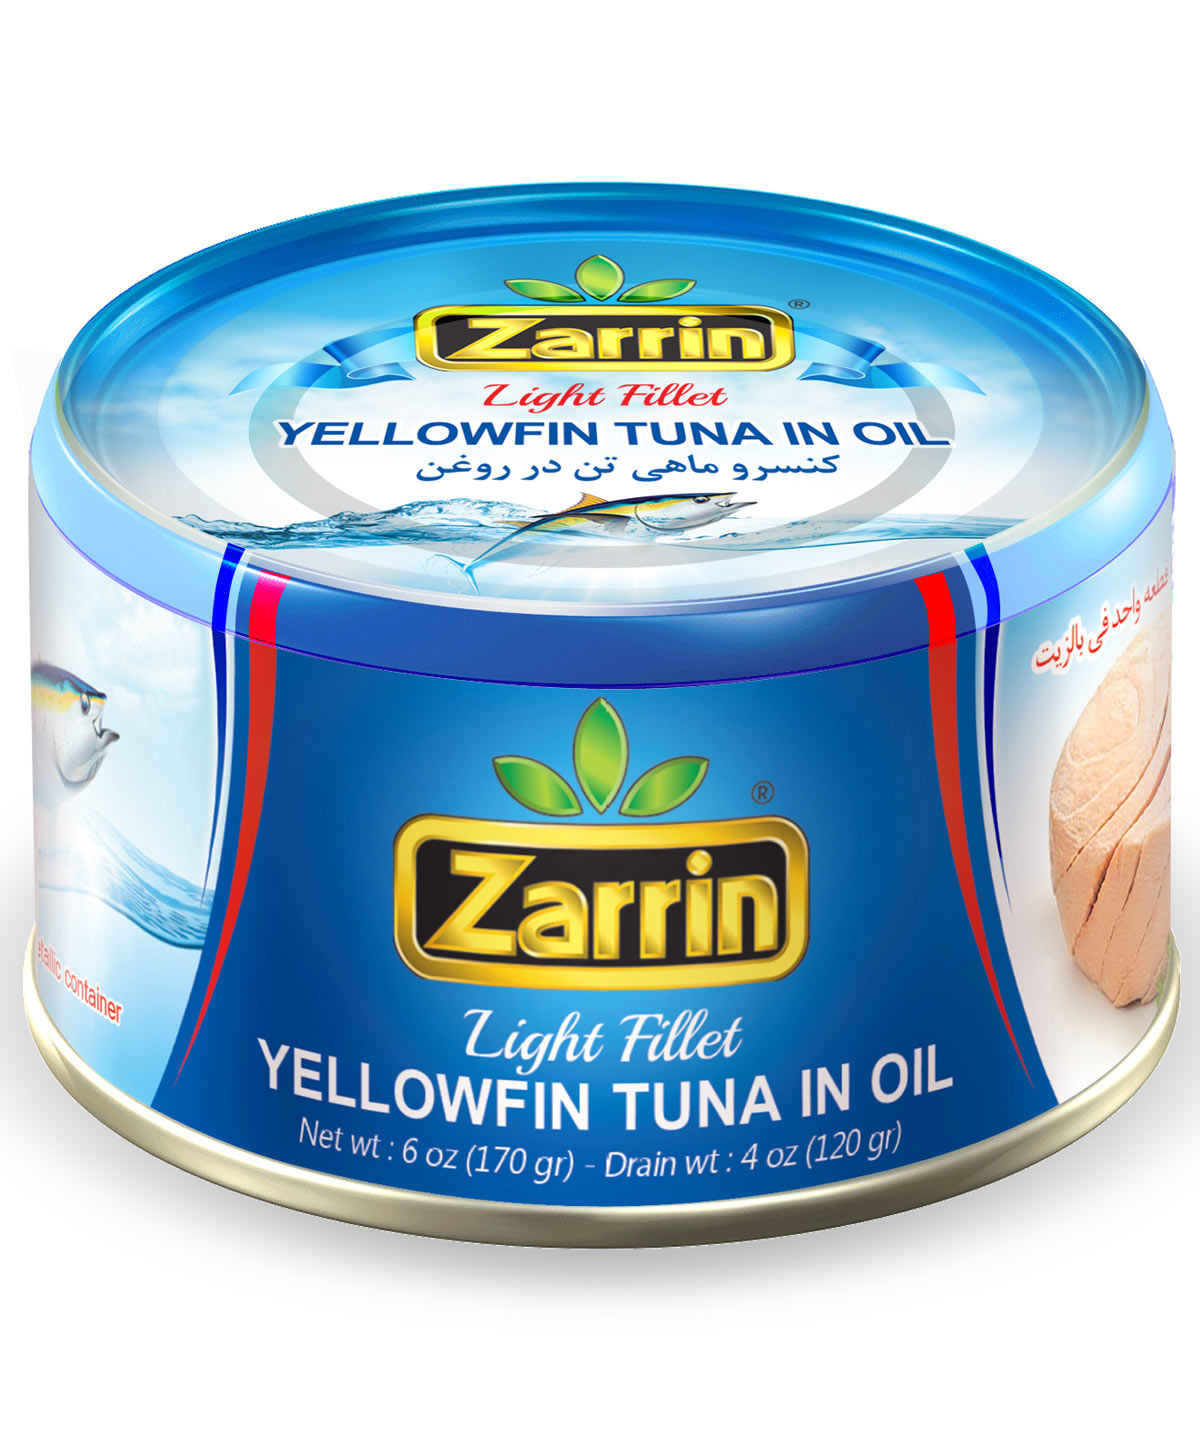 Yellowfin tuna fish in tin can by Zarrin with net weight 6oz.